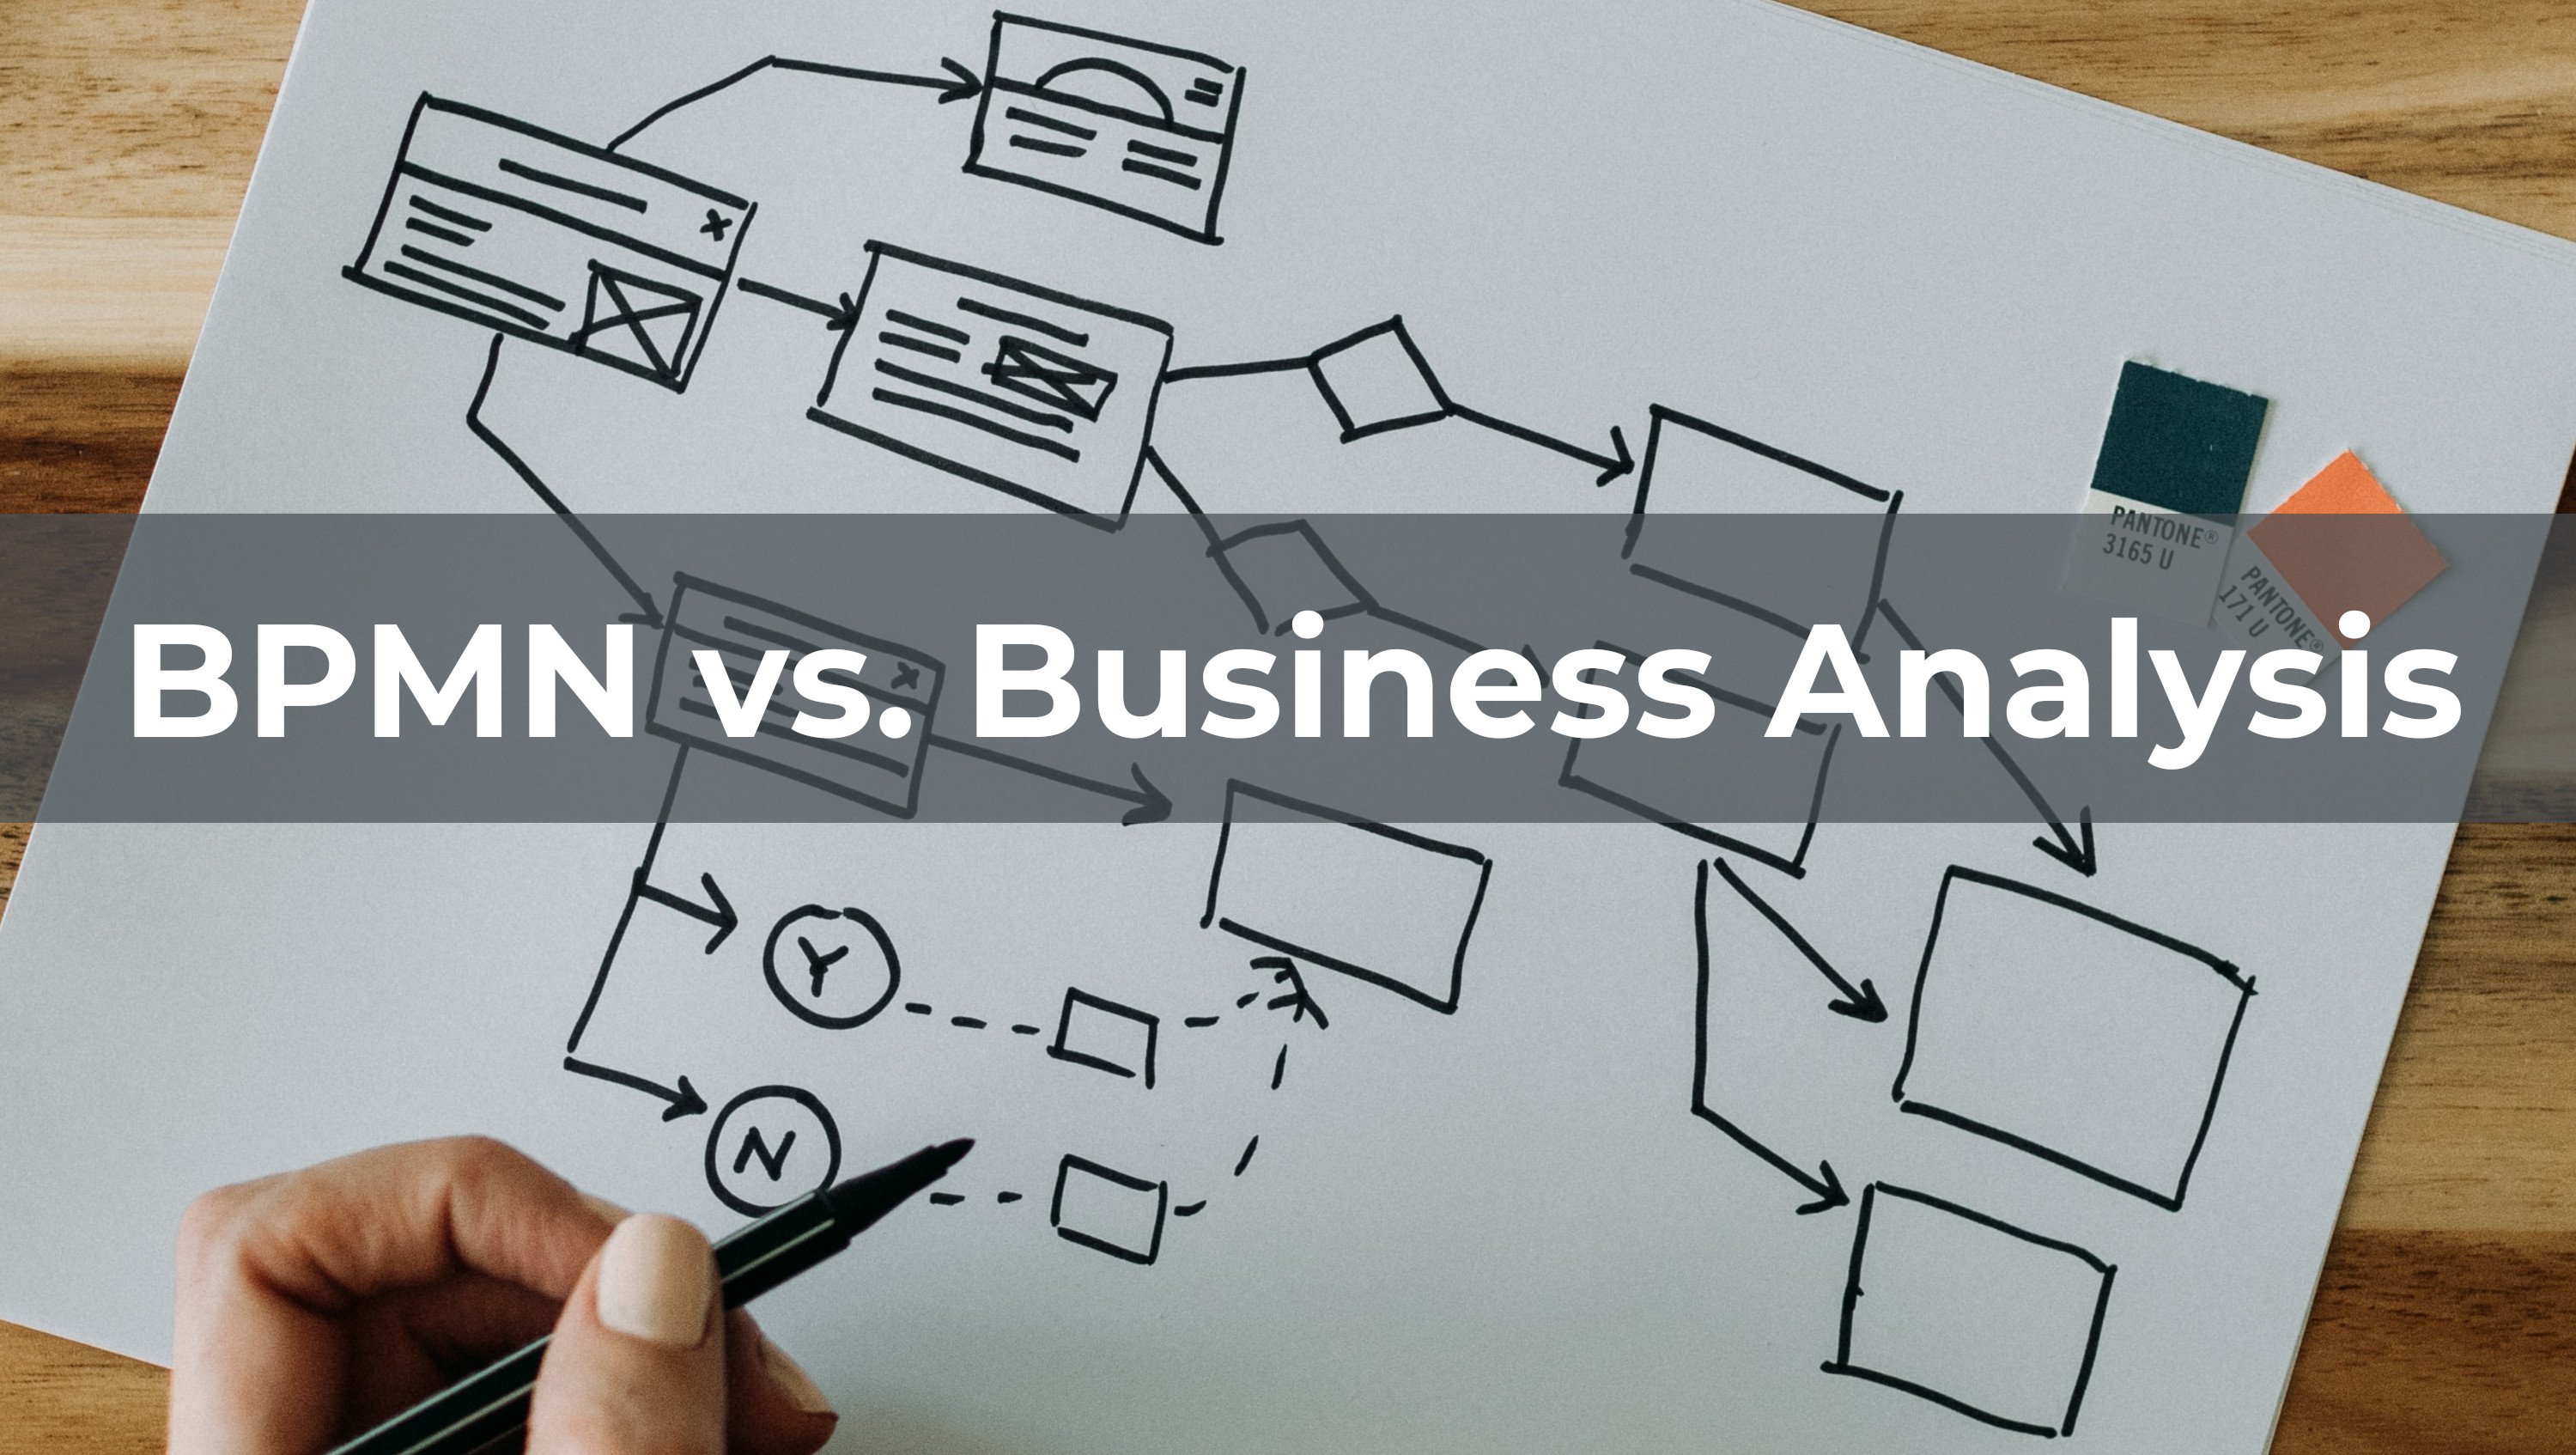 BPMN vs Business Analysis Feature Image